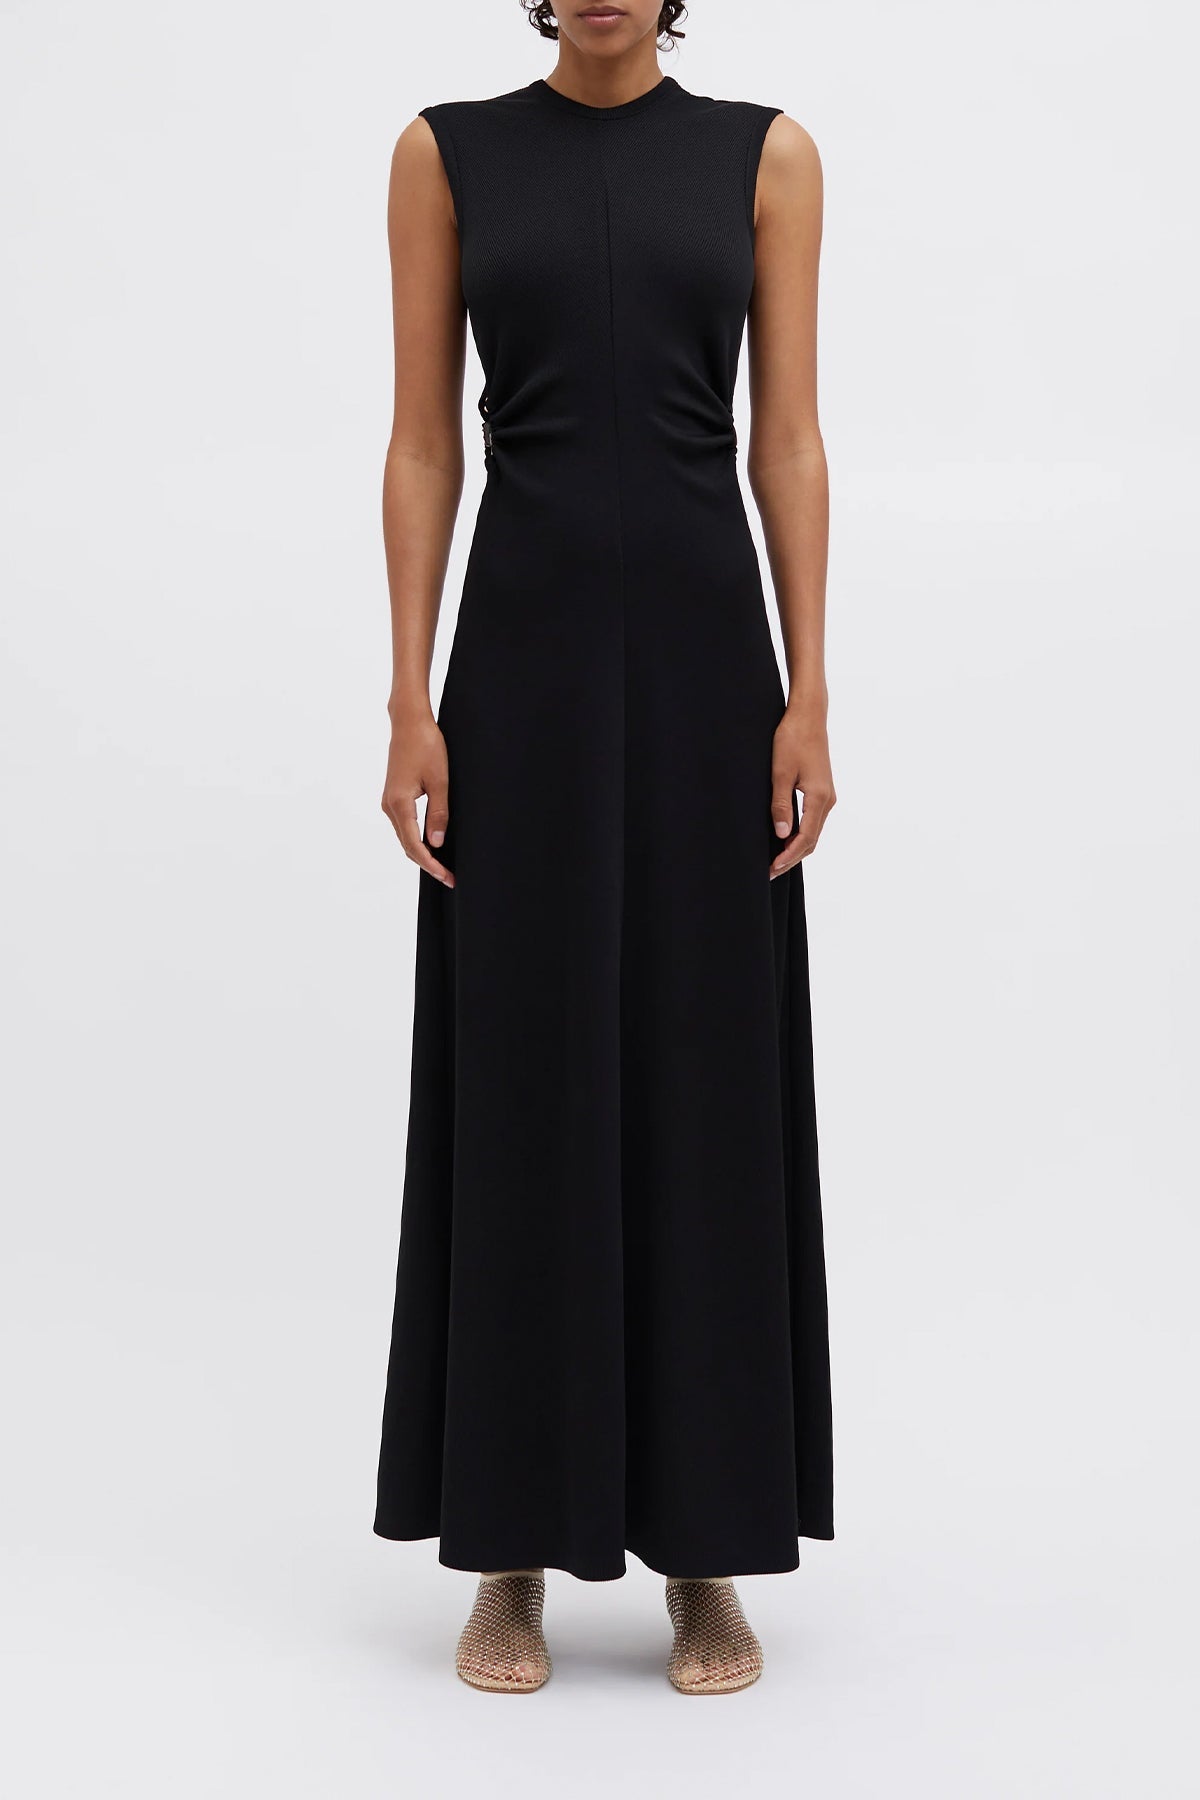 Orbit Fran Dress in Black - shop-olivia.com